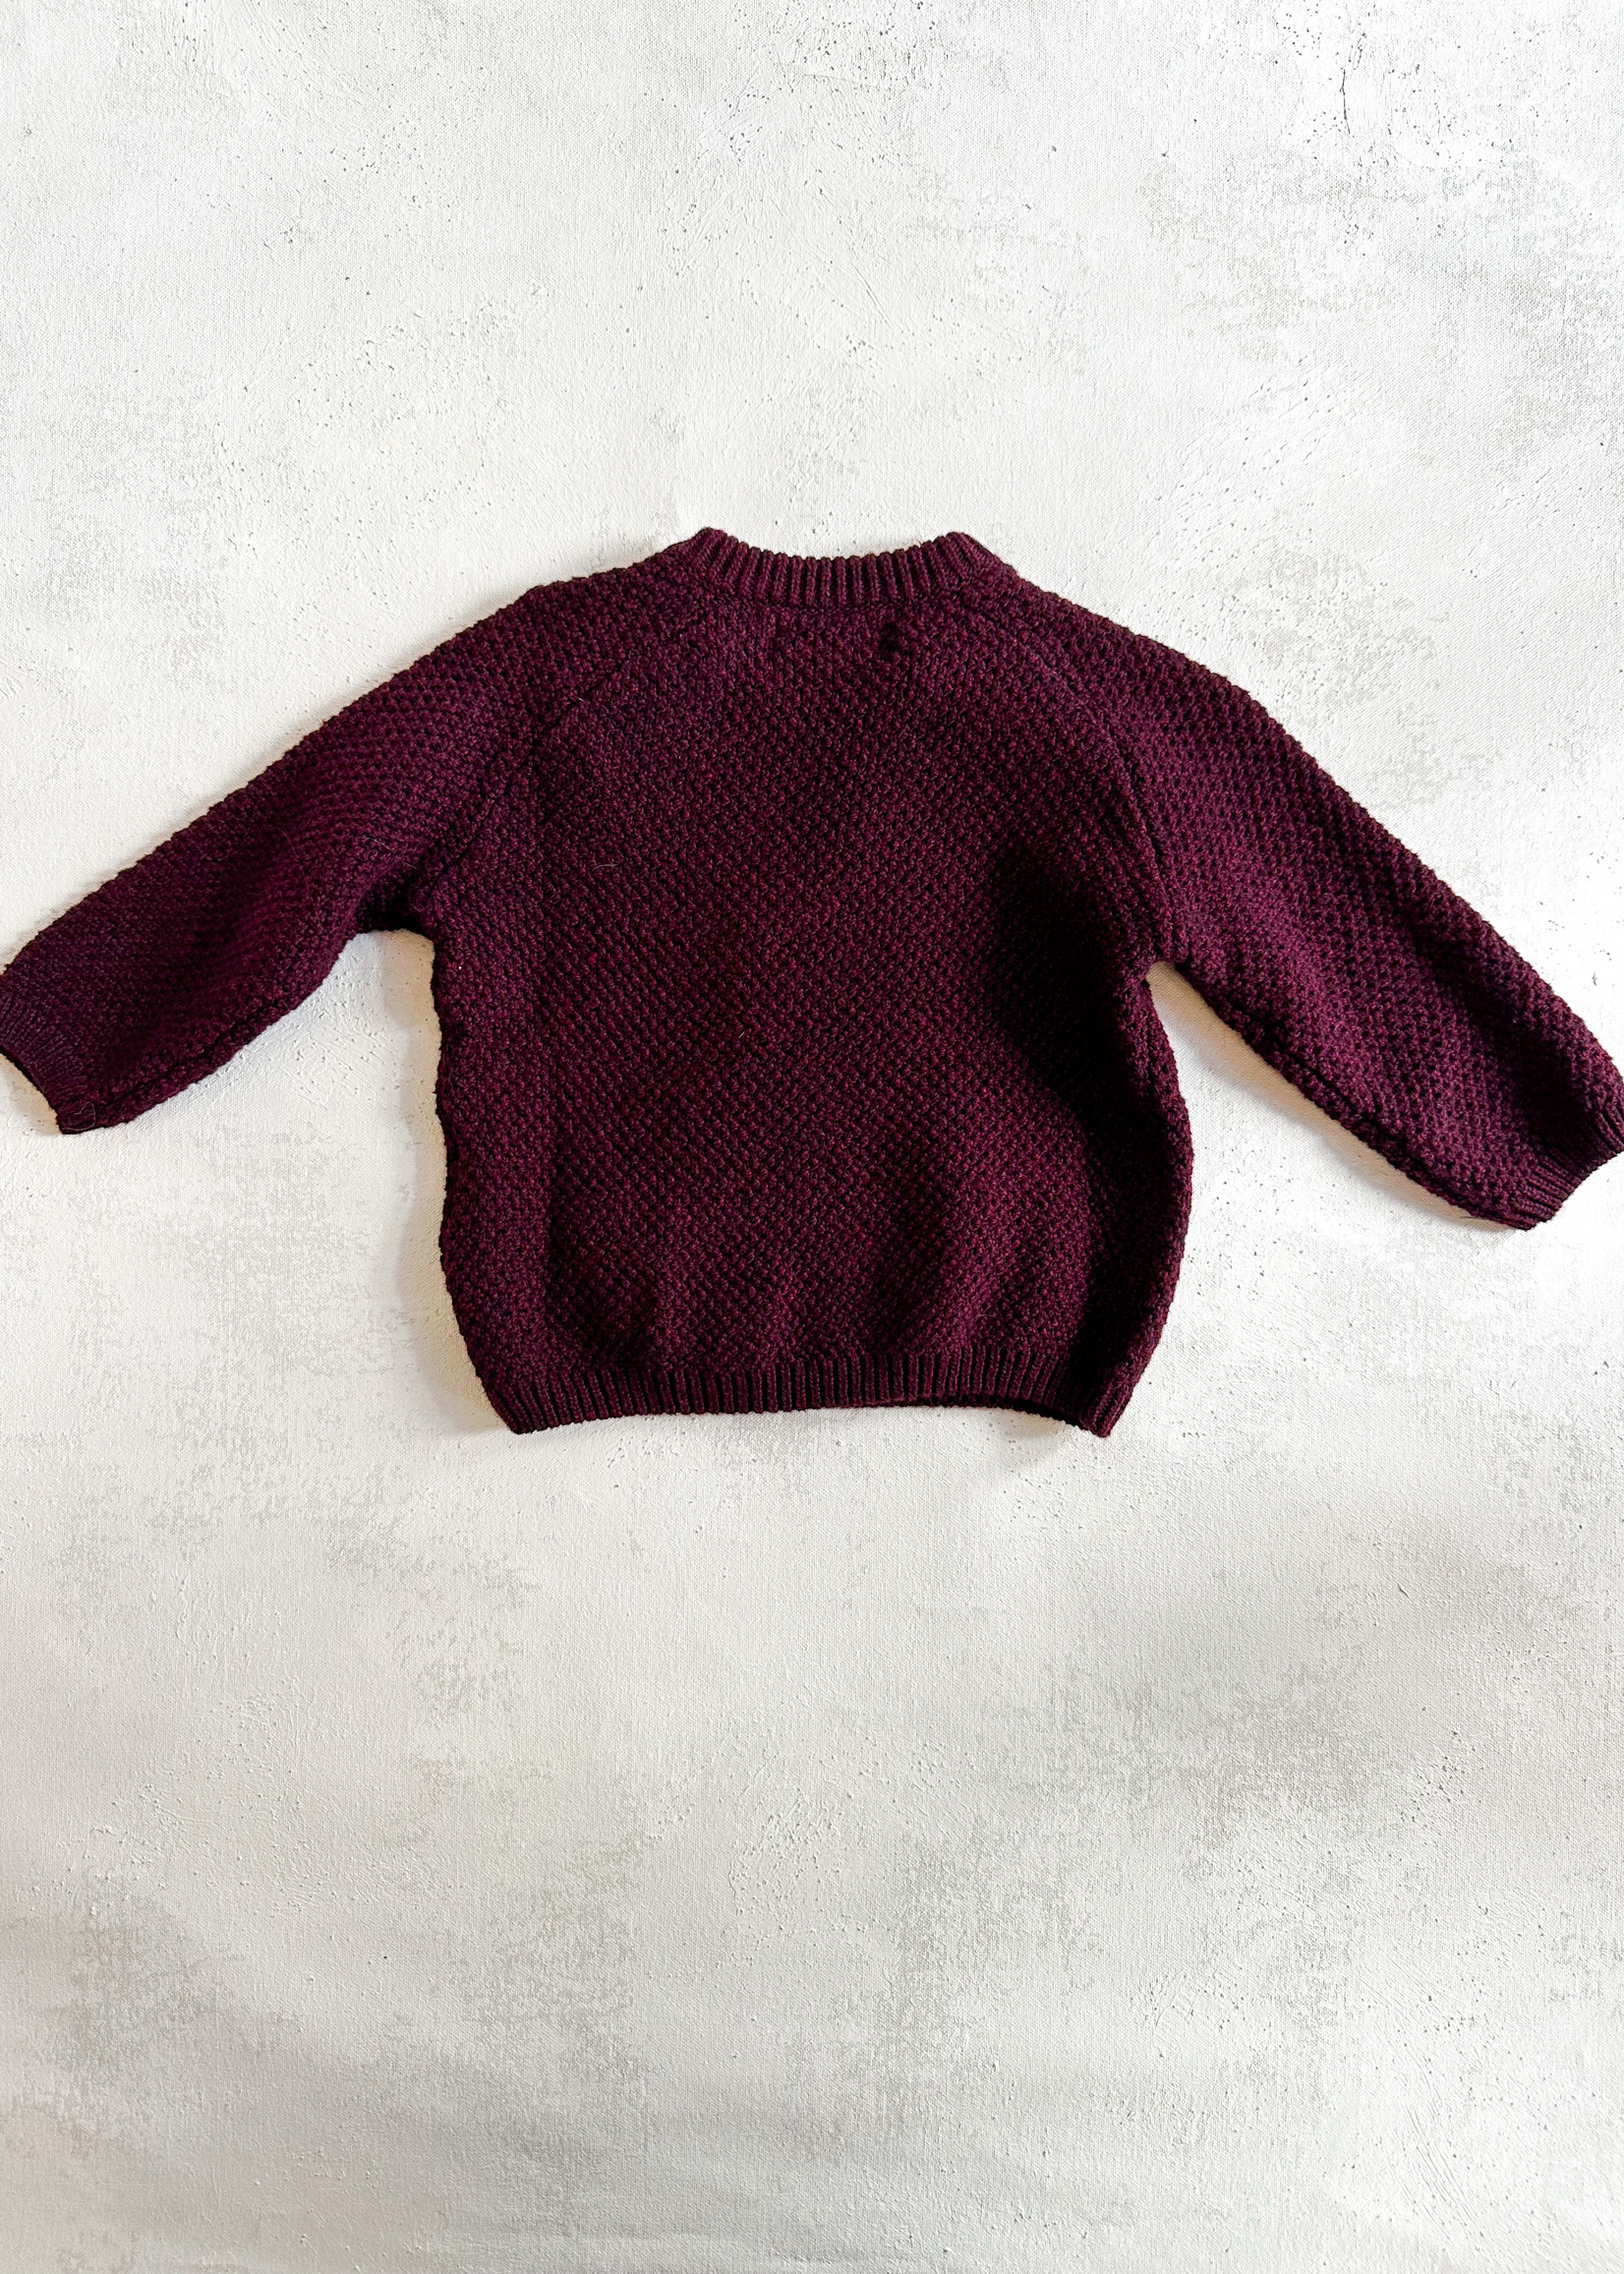 Elitaire Petite Morrison Sweater in Burgundy